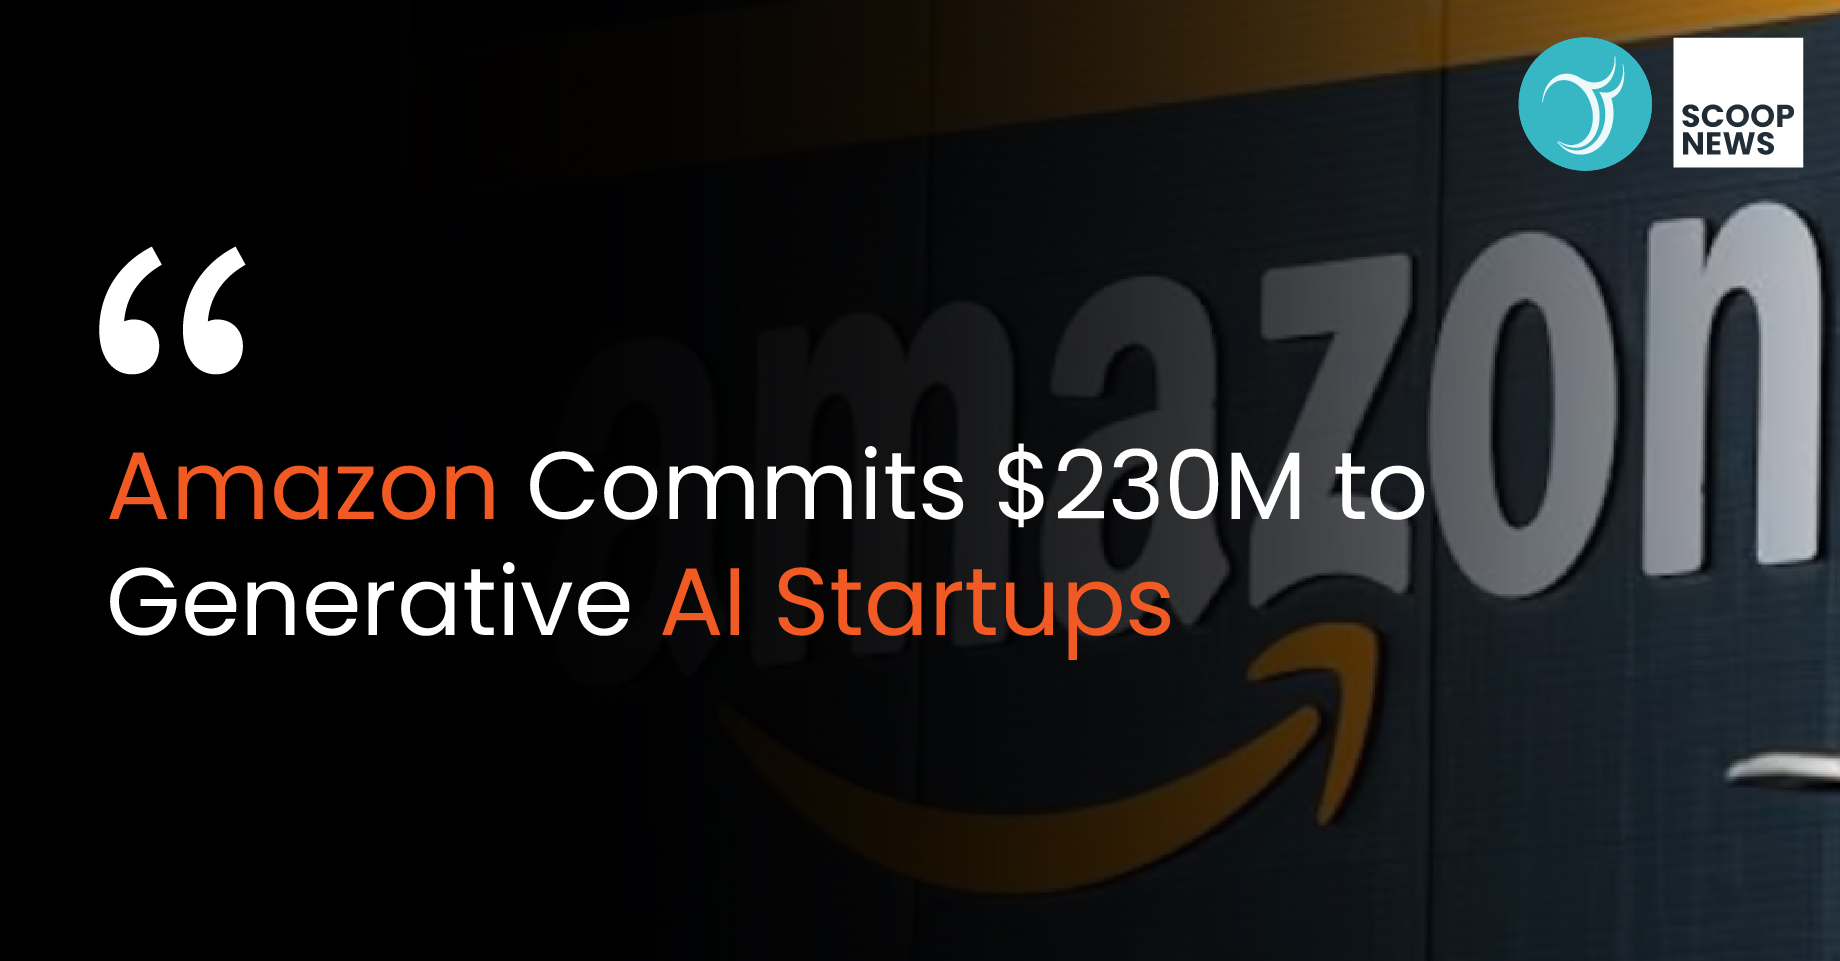 Amazon Commits $230M to Generative AI Startups